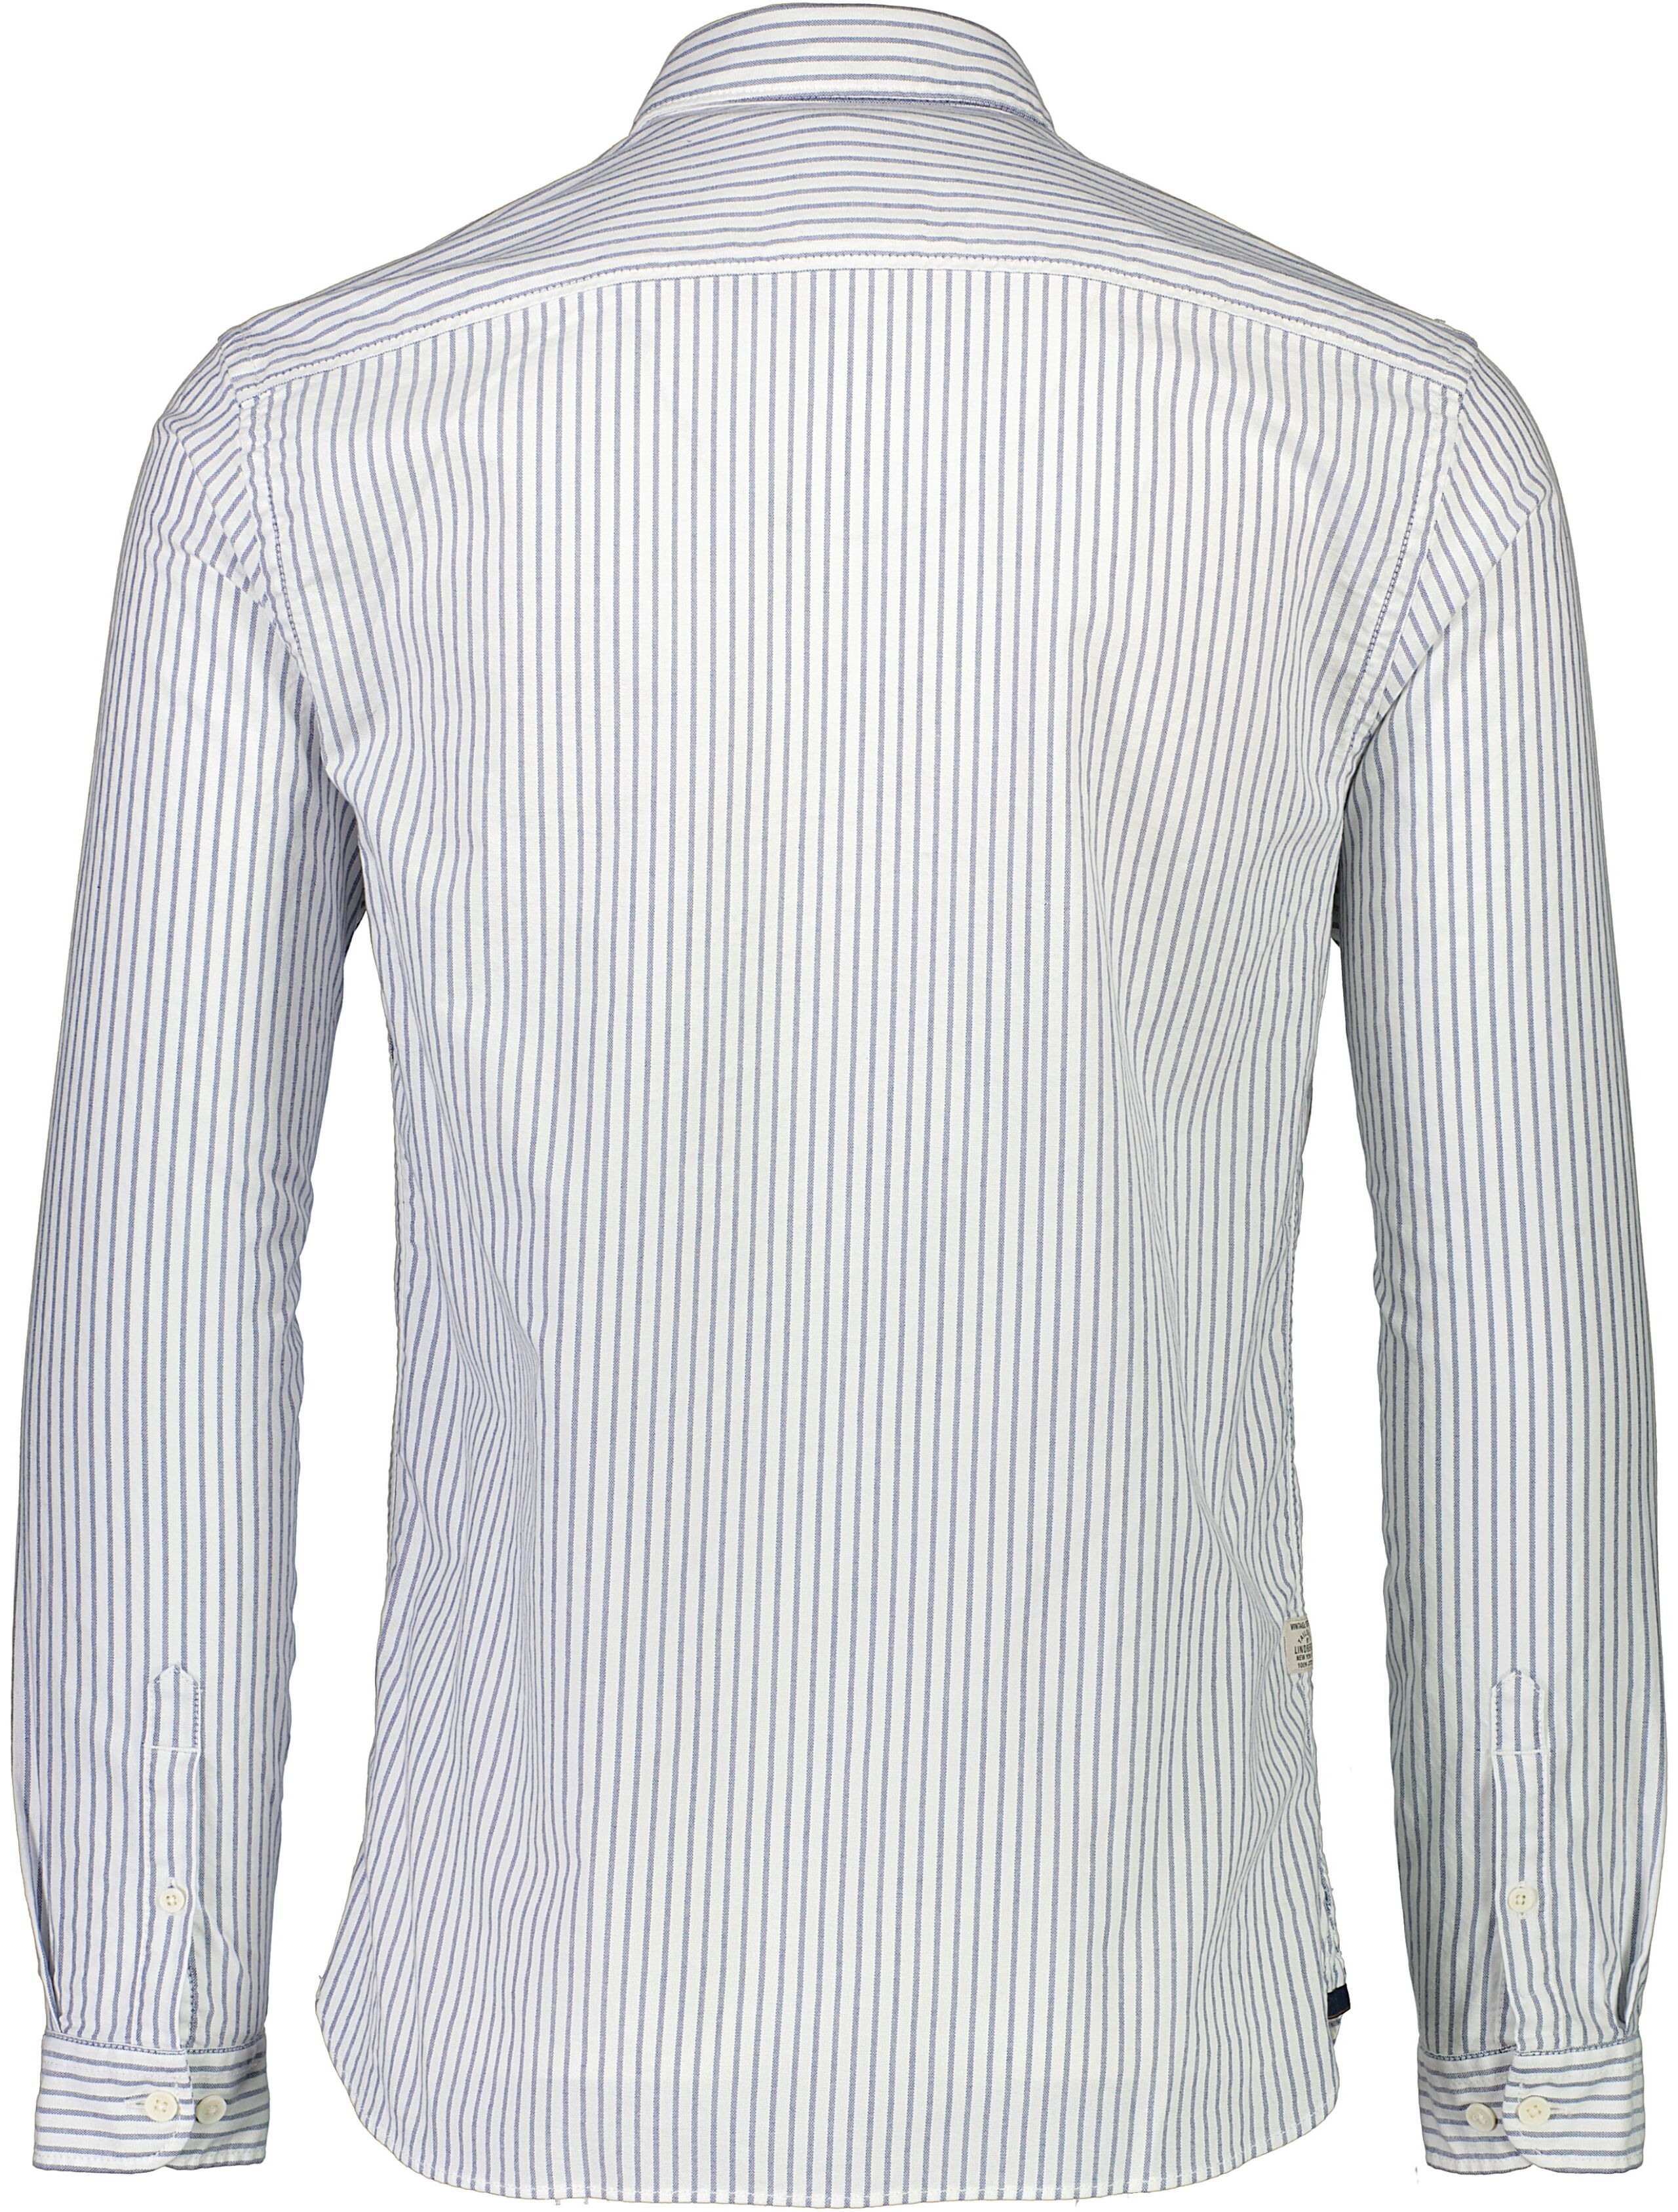 Oxford shirt 30-220114